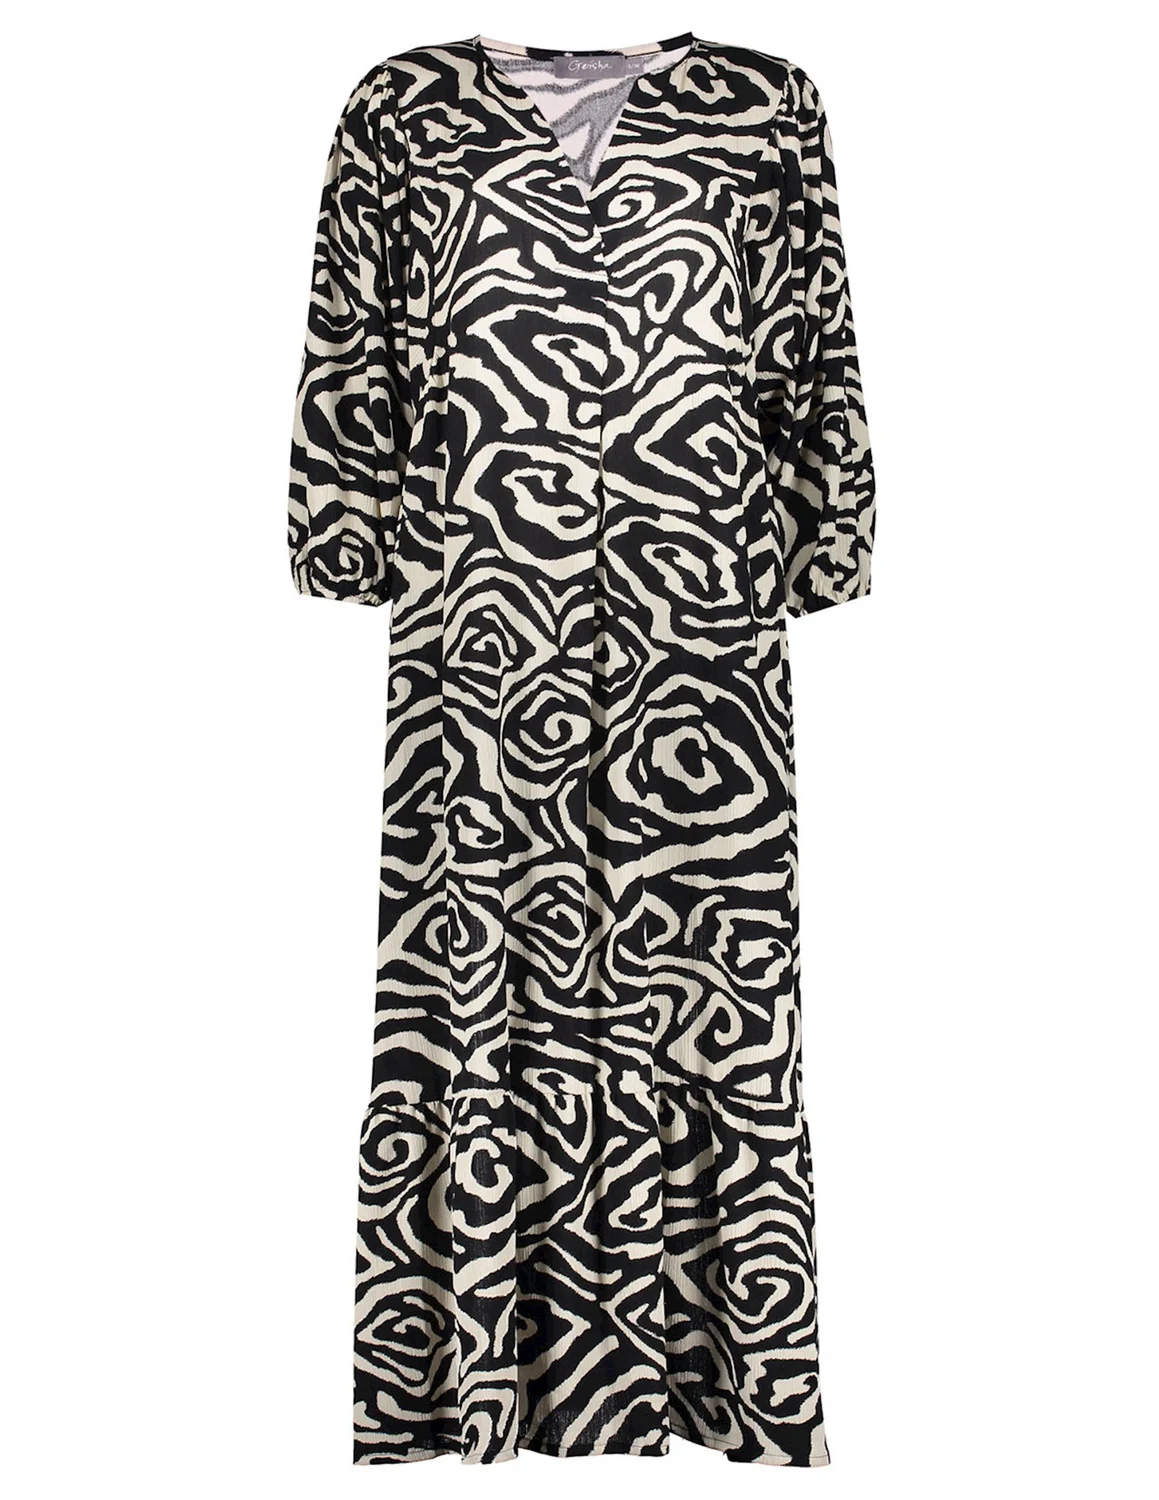 vieren spreker Chinese kool Geisha Dress 37108-20 zwart/wit kopen bij The Stone